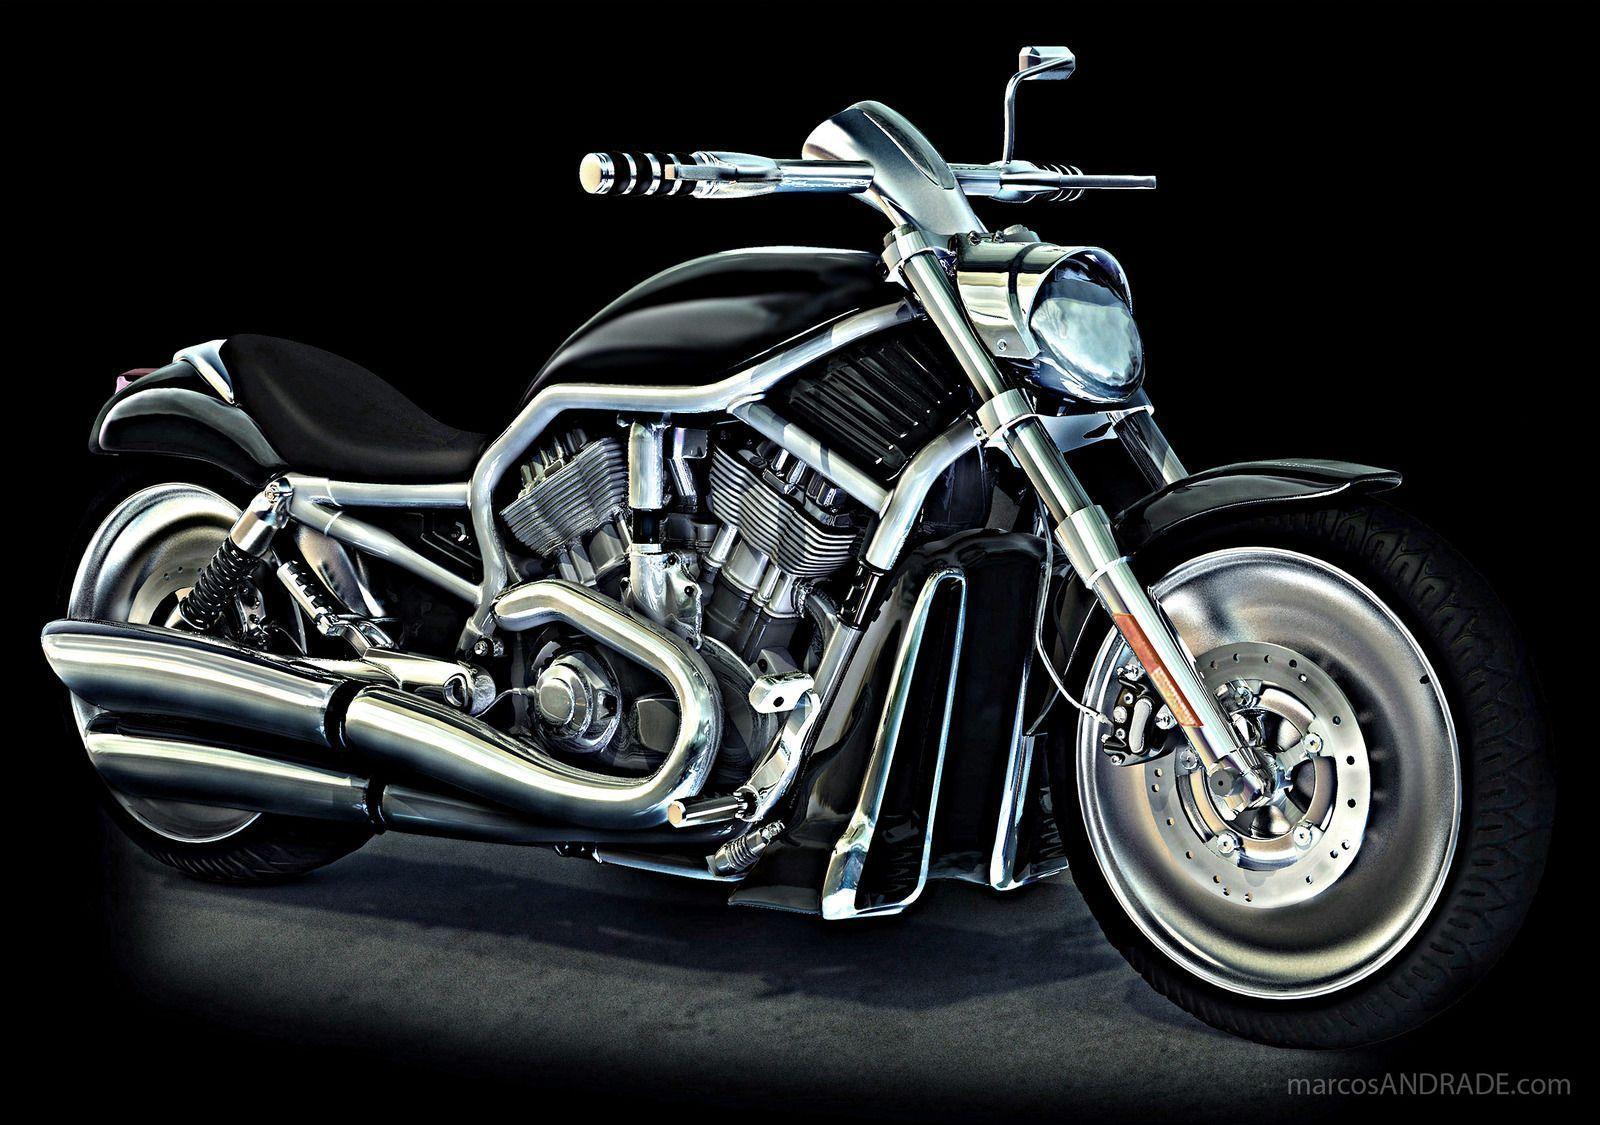 Harley davidson picture 3D automotive harley davidson motorcycle